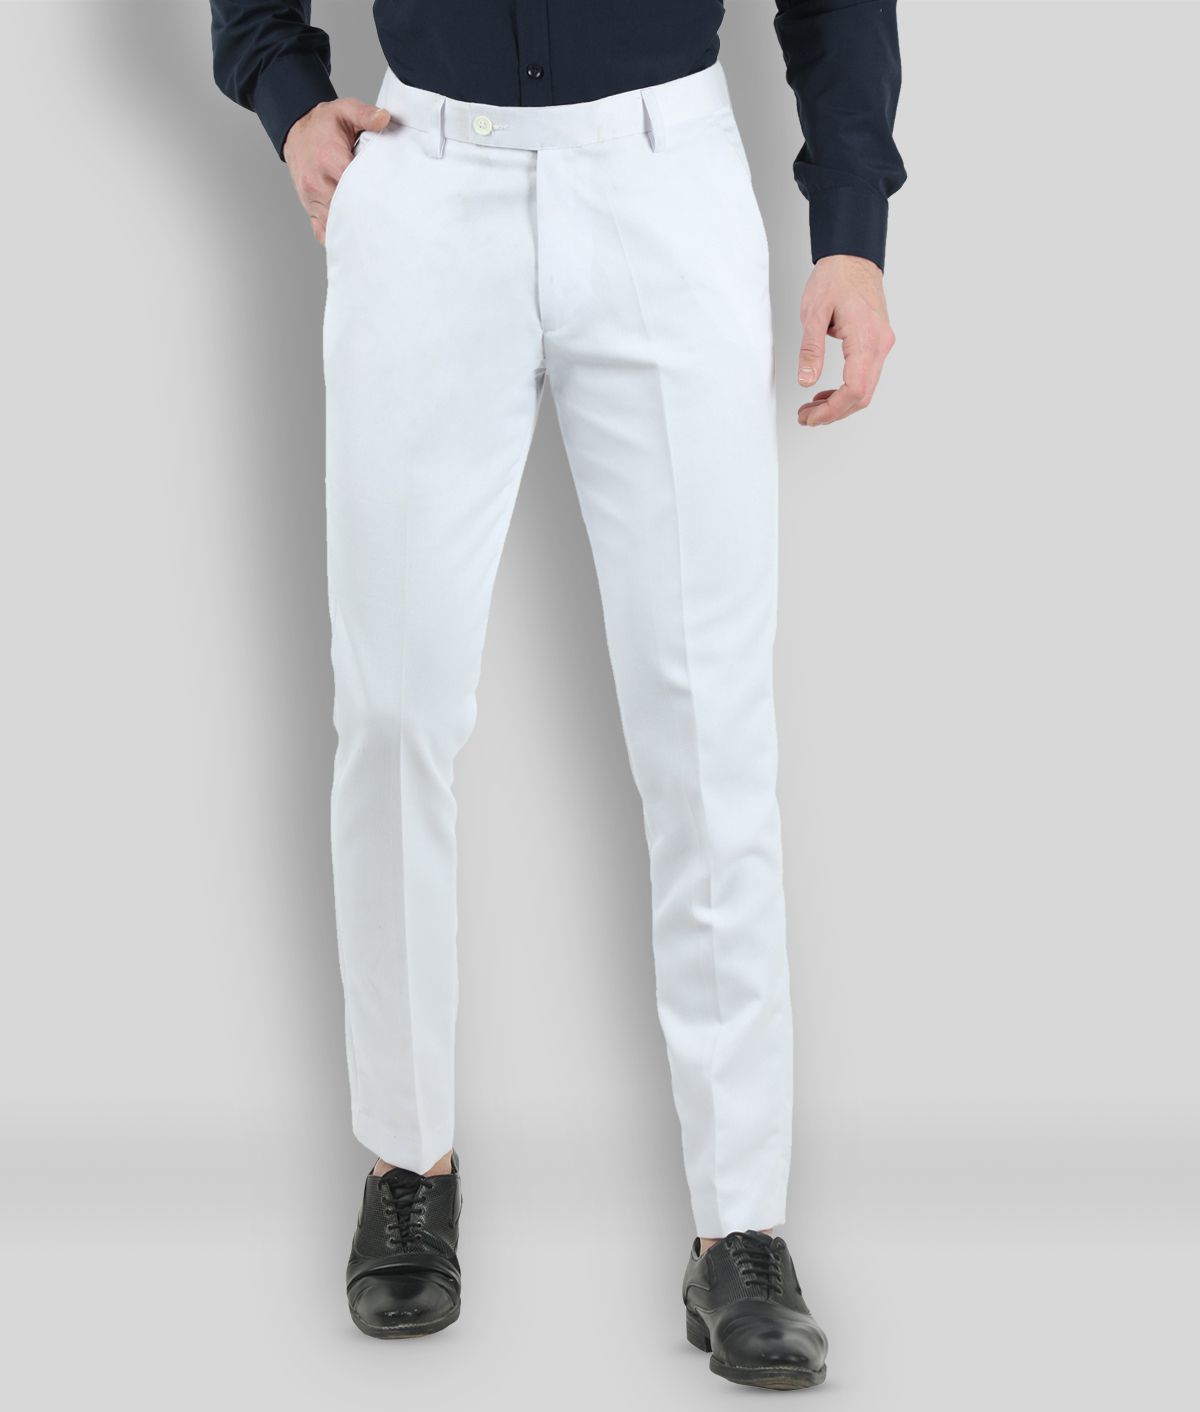     			VEI SASTRE - White Cotton Blend Slim Fit Men's Formal Pants (Pack of 1)